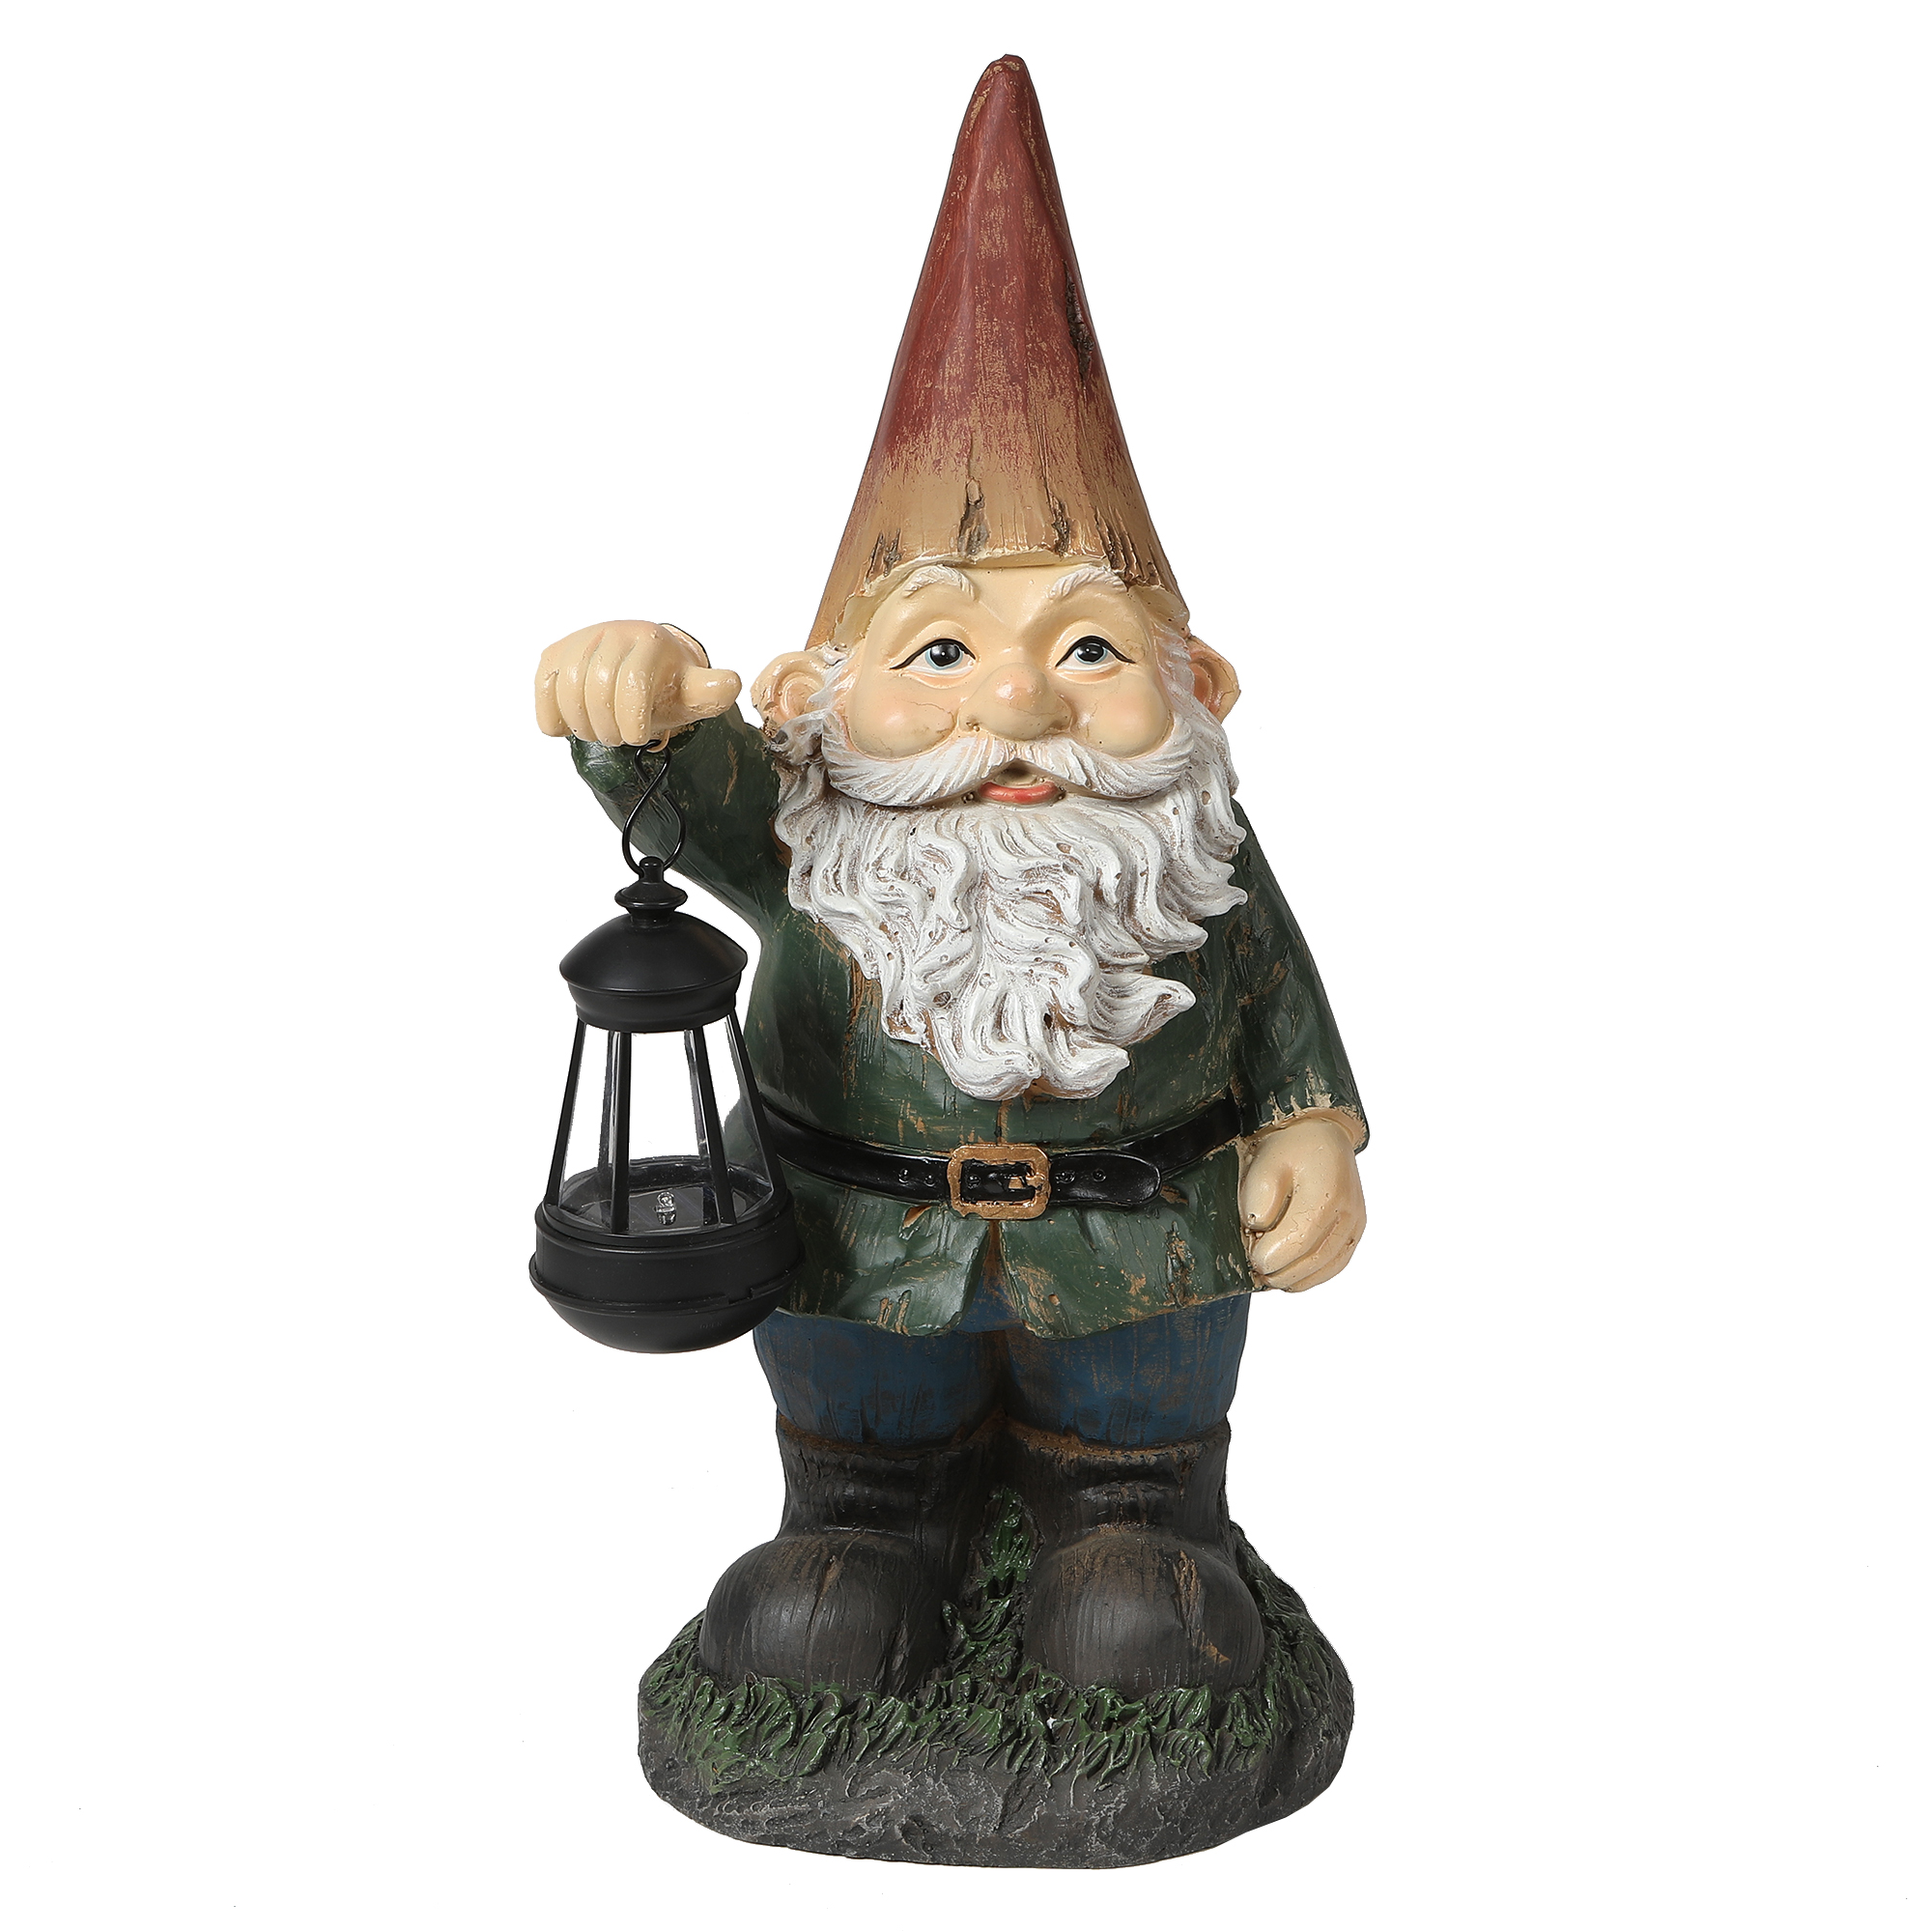 Wh013 Gnome With Solar Lantern Garden Statue, White